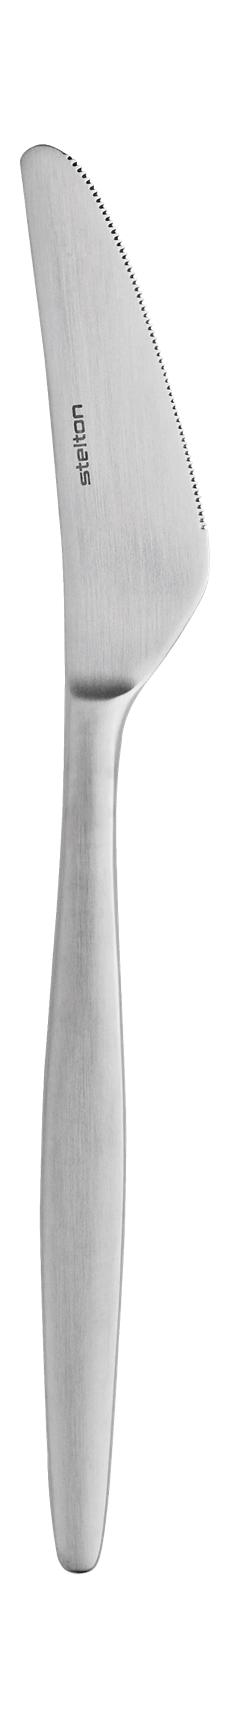 Stelton Aztec bordkniver